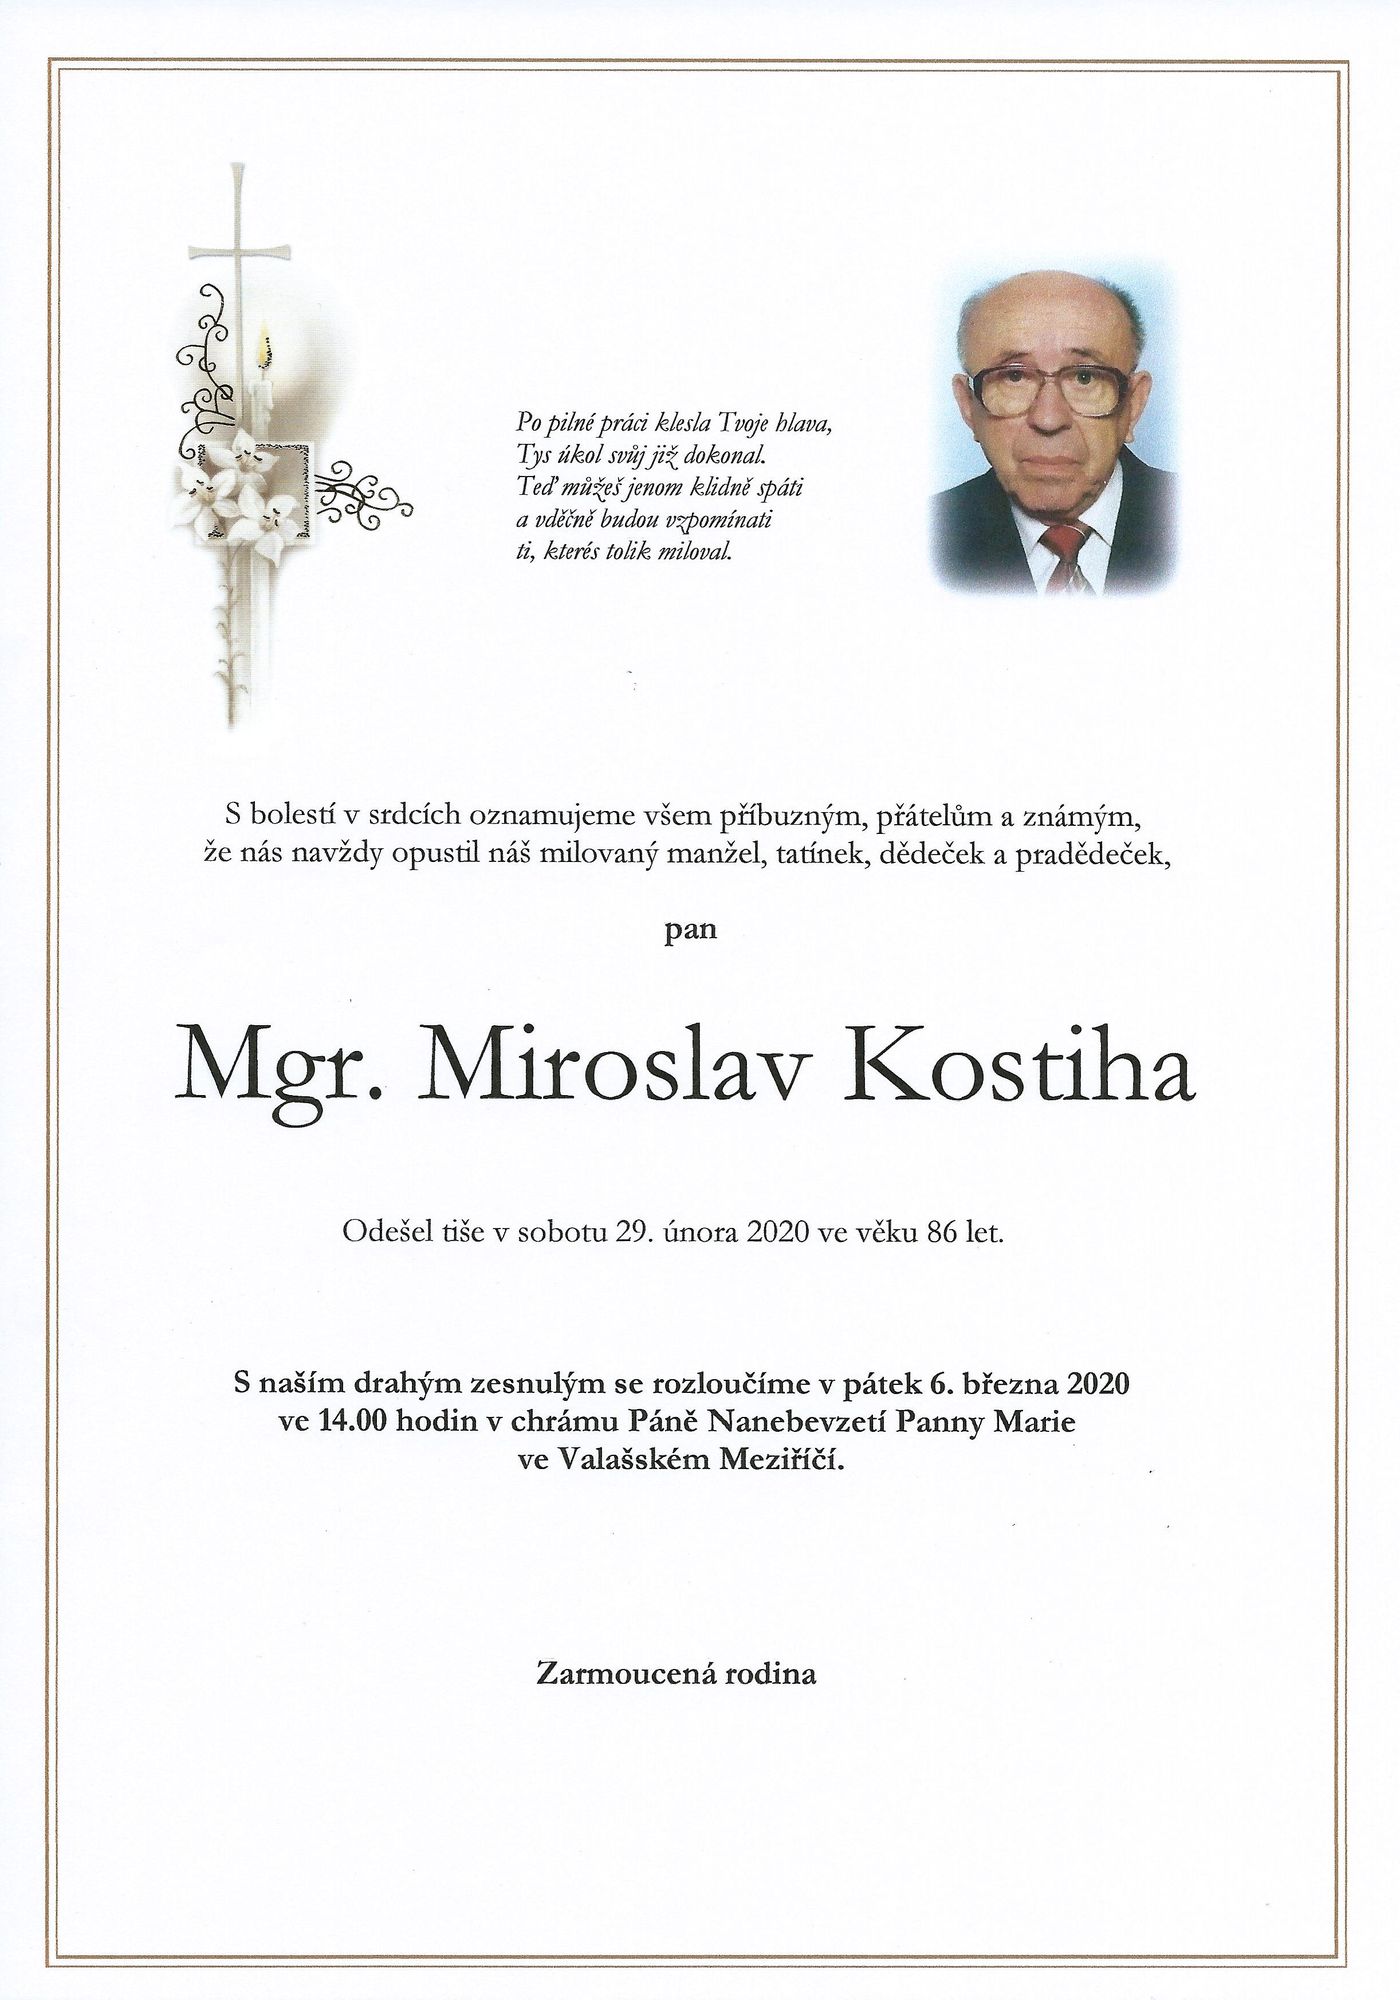 Mgr. Miroslav Kostiha